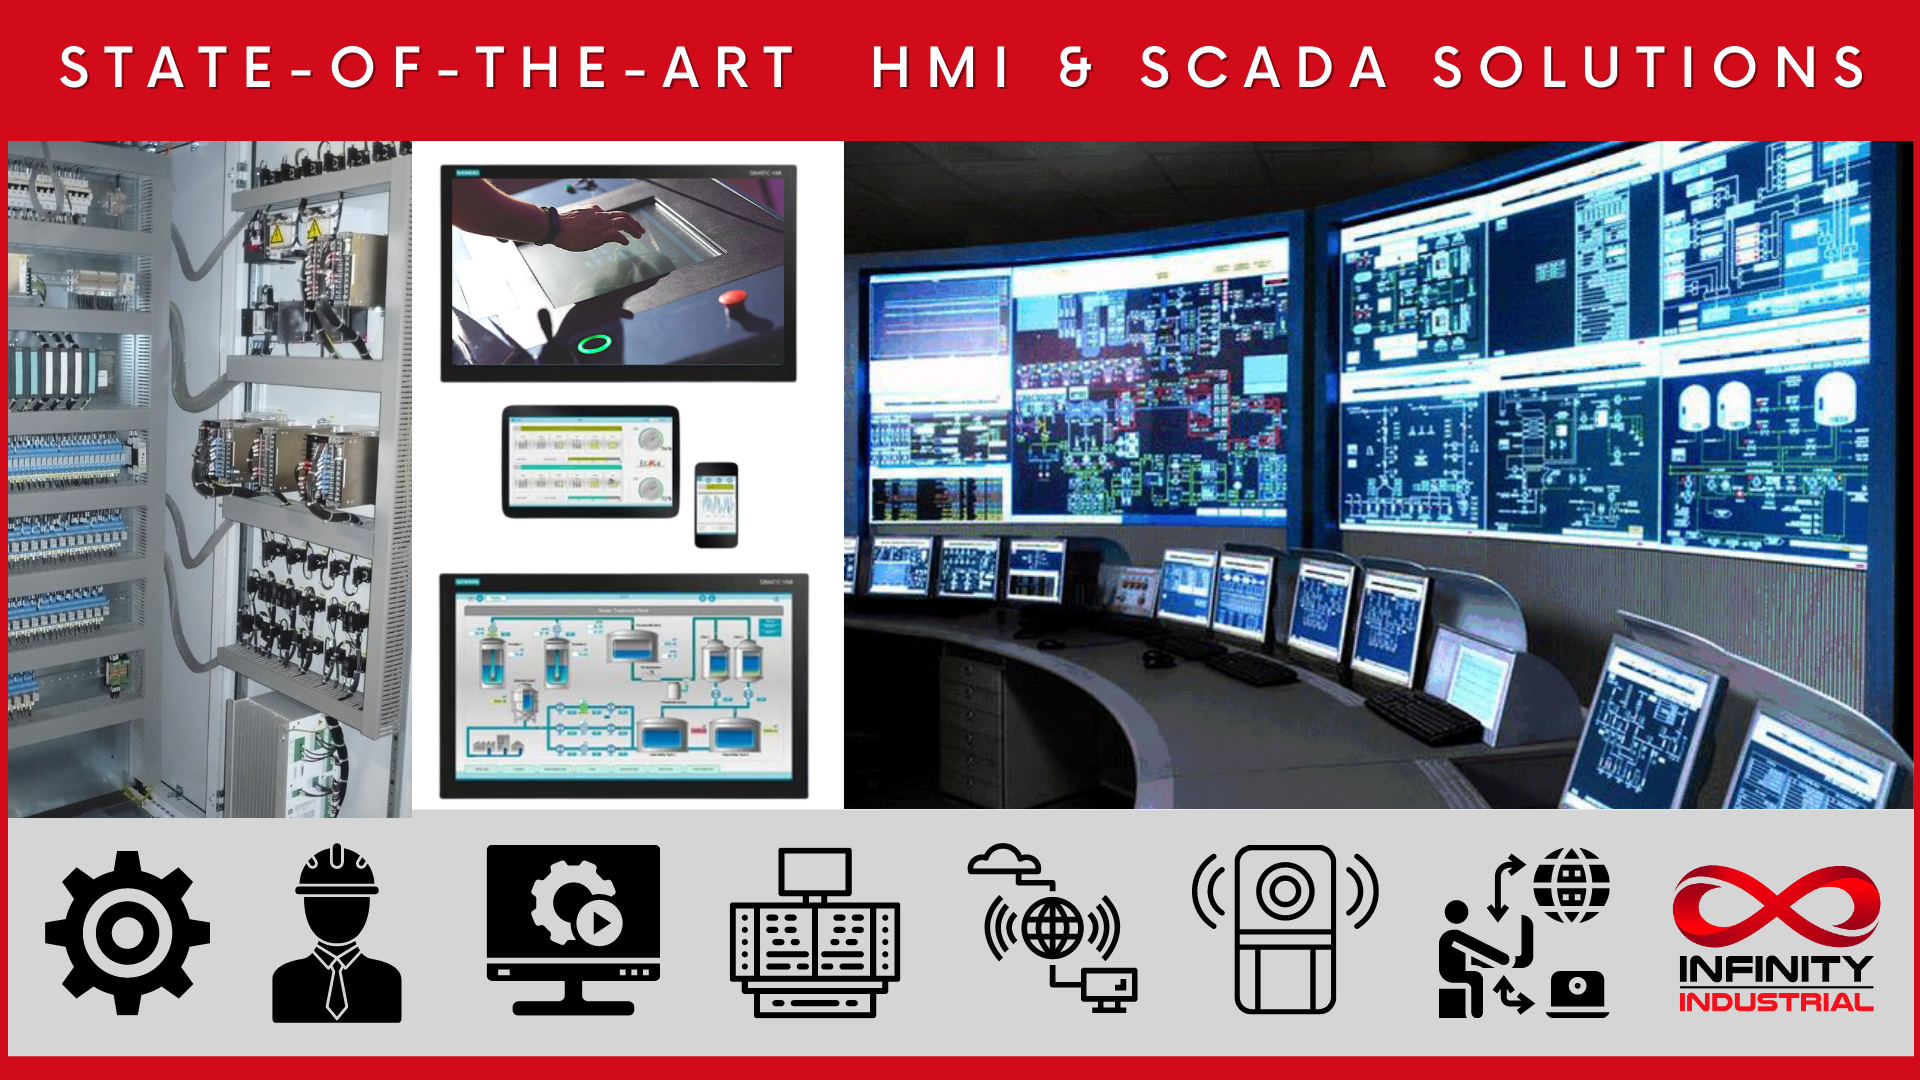 HMI & SCADA Solutions Image (1)